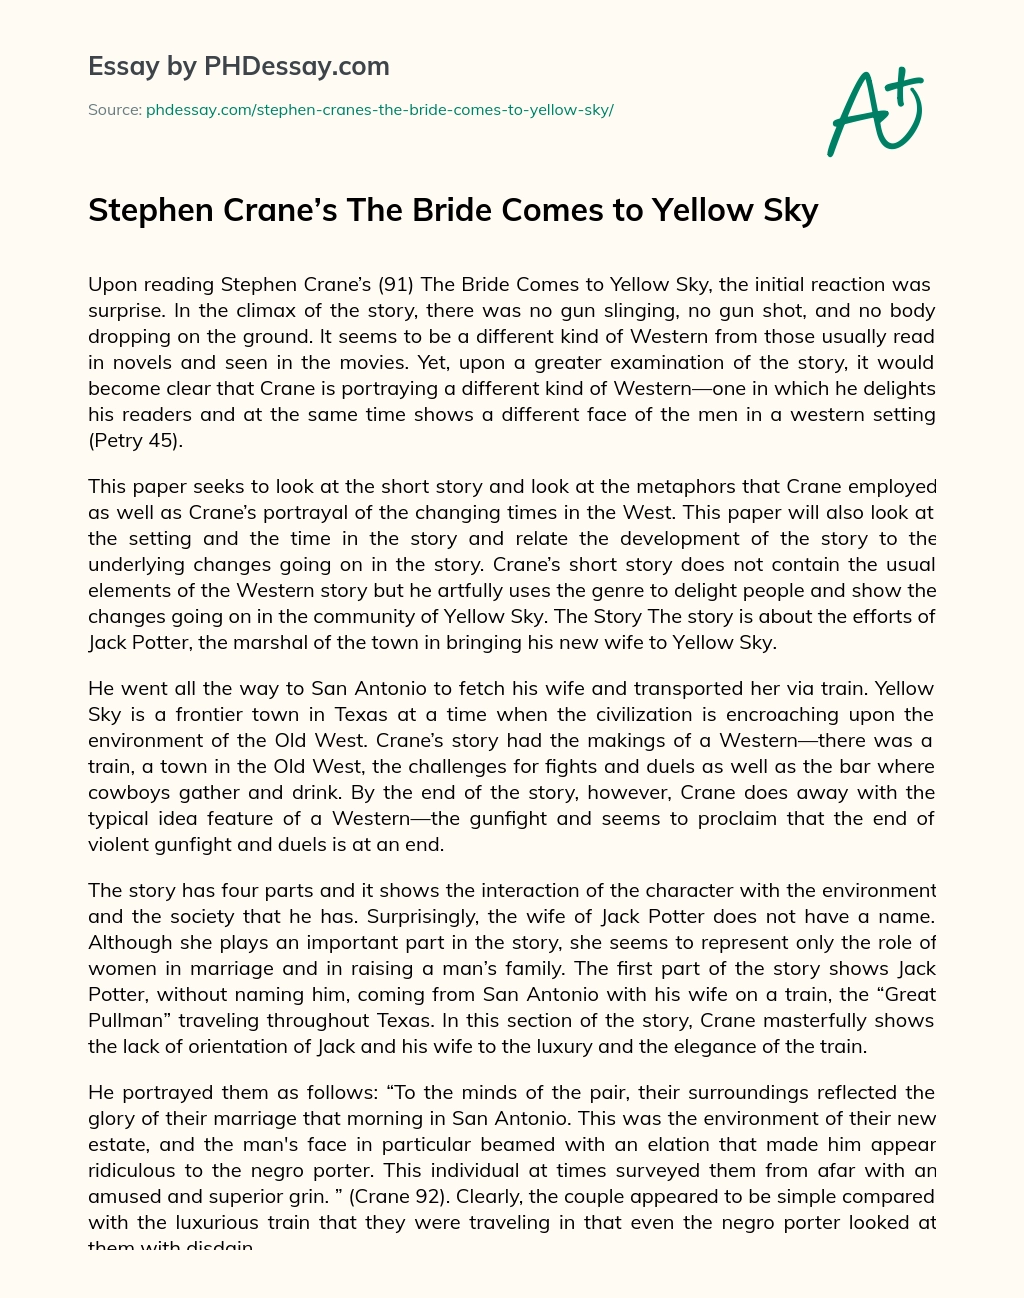 Stephen Crane’s The Bride Comes to Yellow Sky essay